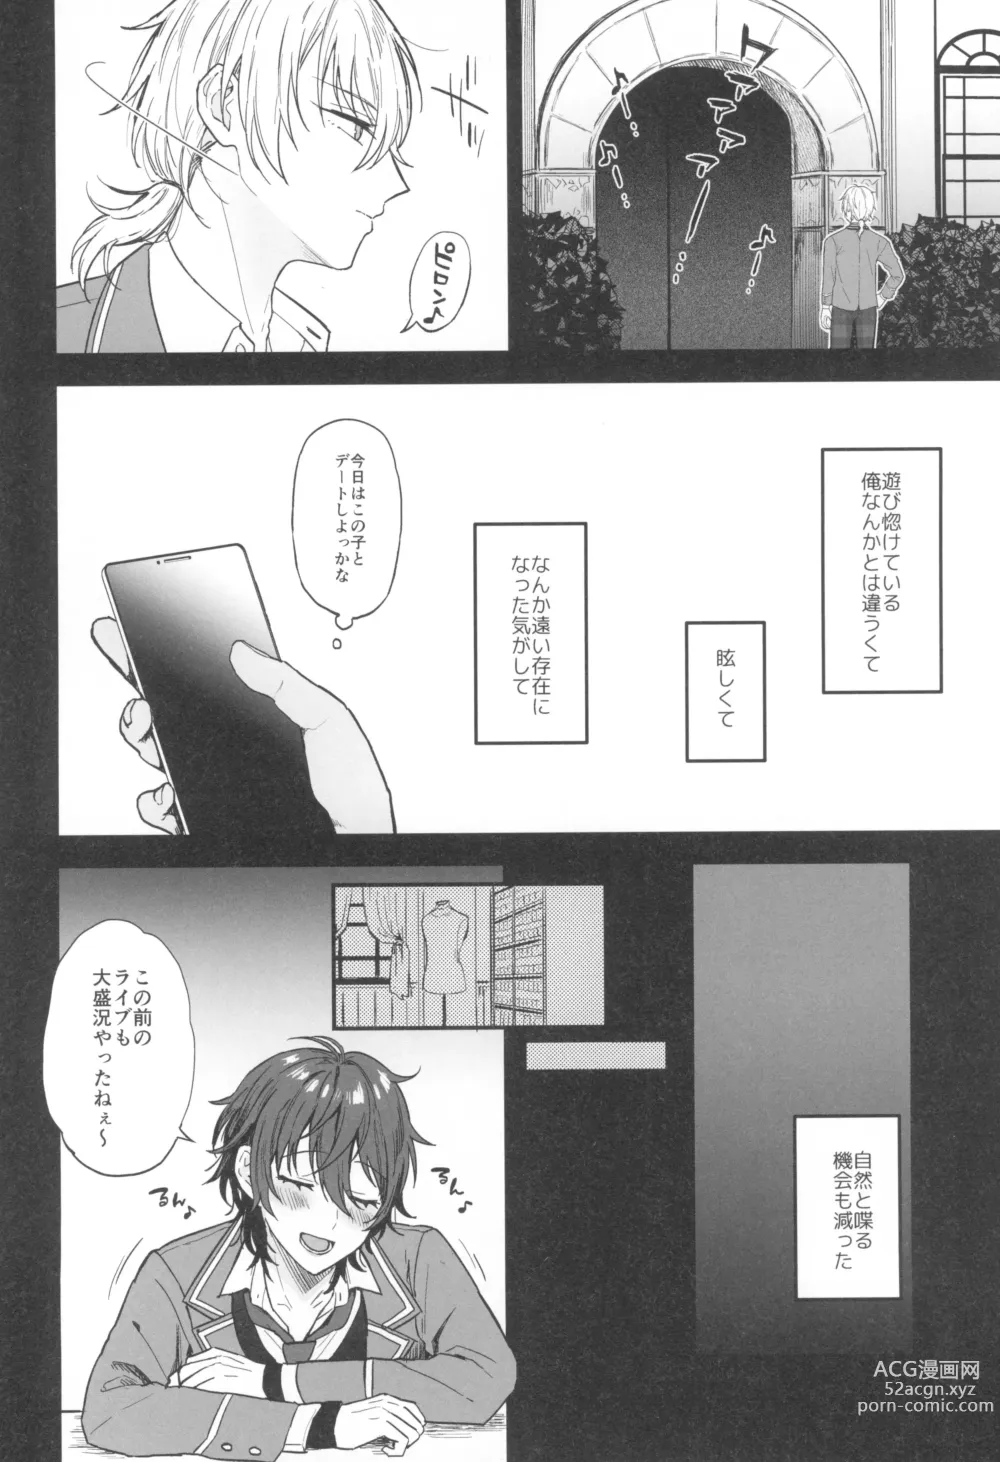 Page 18 of doujinshi Kore made mo korekara mo